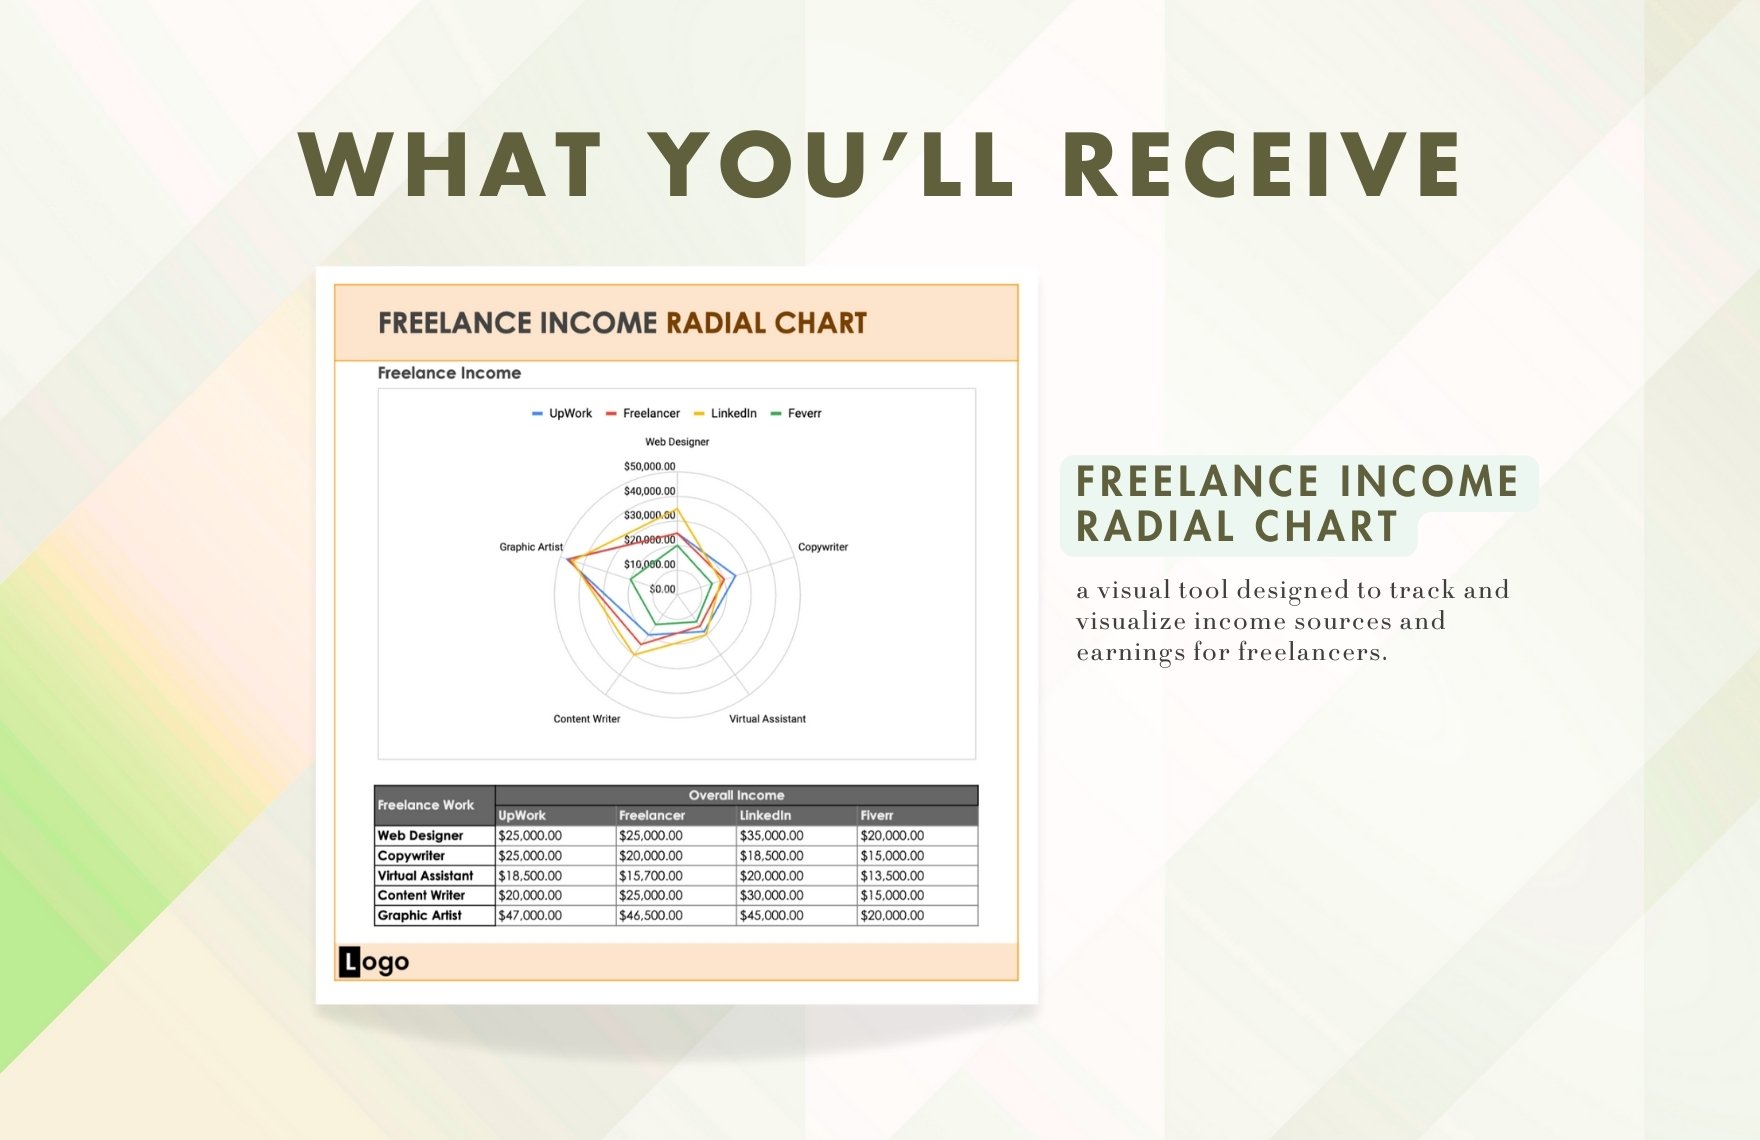 Freelance Income Radial Chart